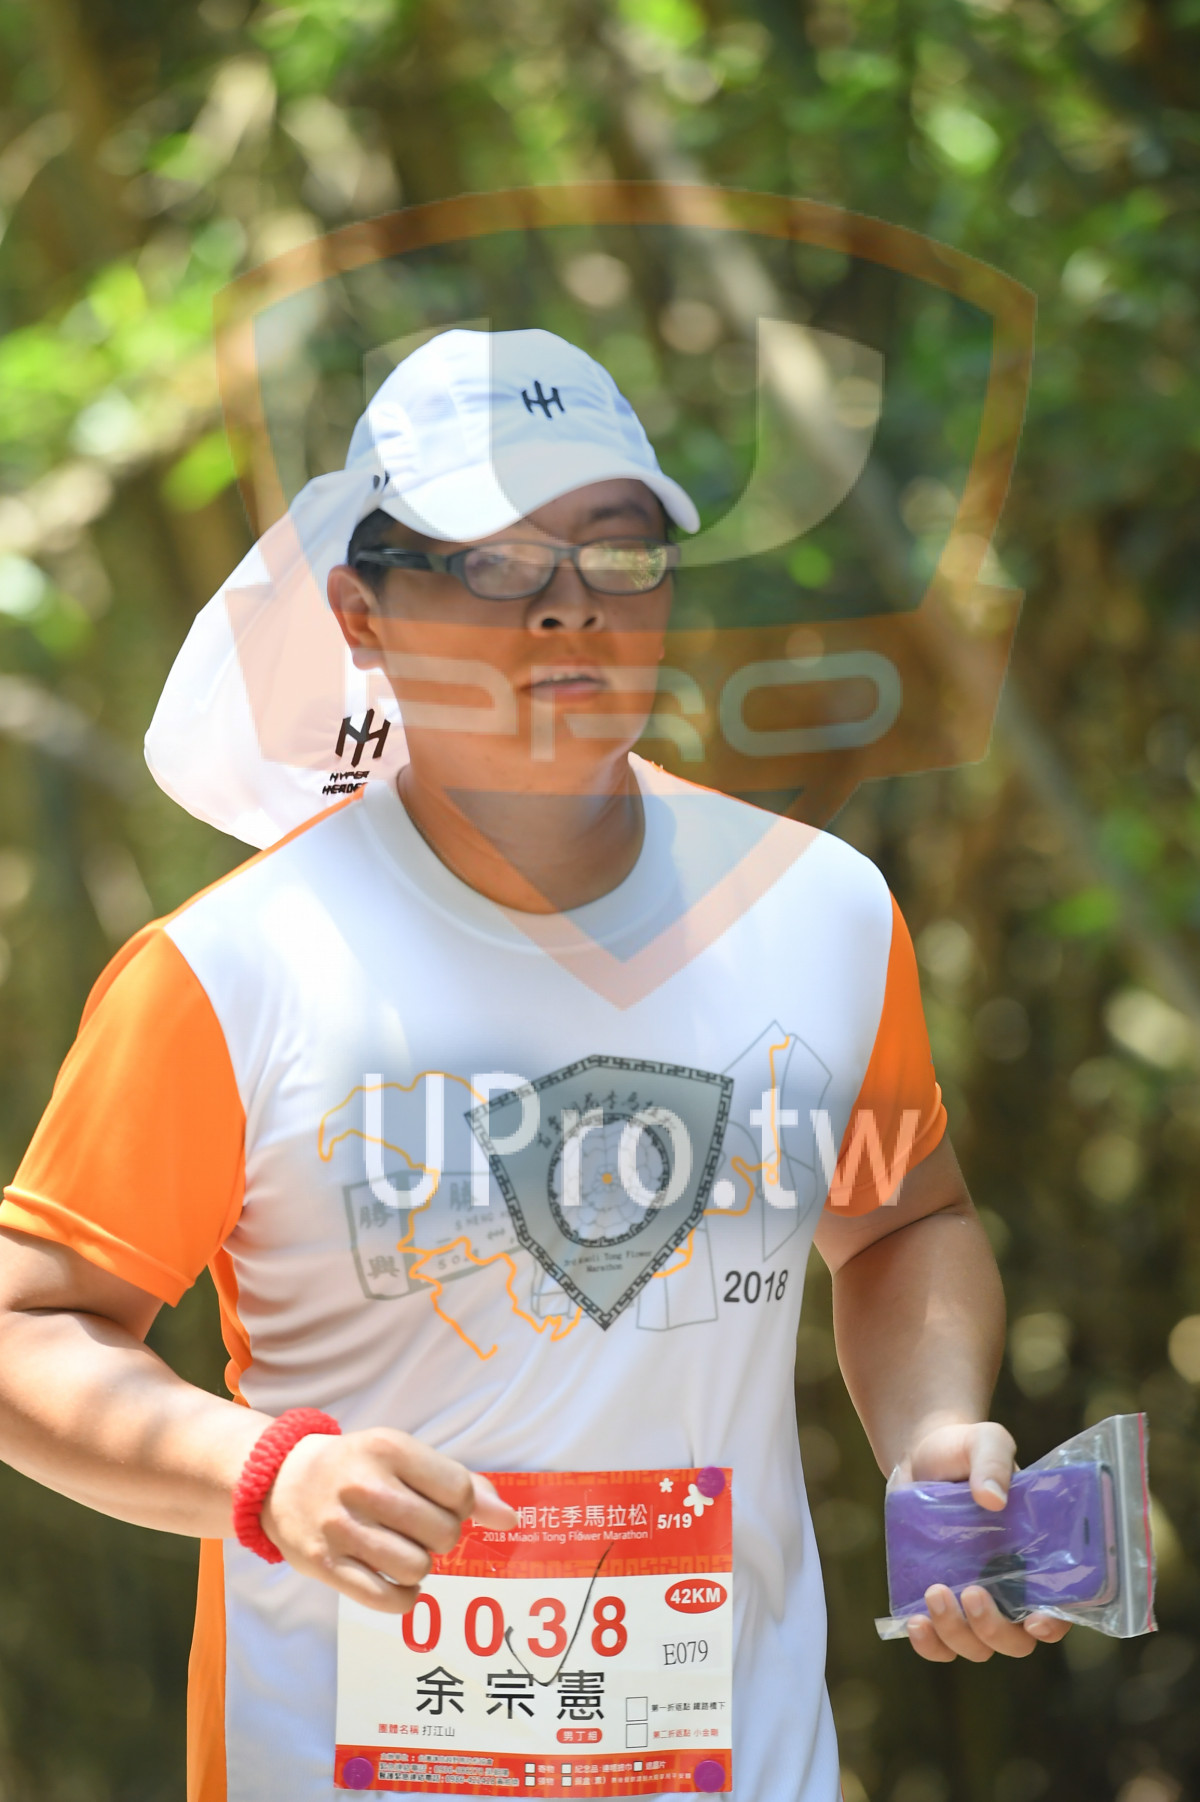 ,2018,5,19,2018 Madi Tong Fiwes Marathon,038,,42KM,E079,|綠色隧道3|中年人